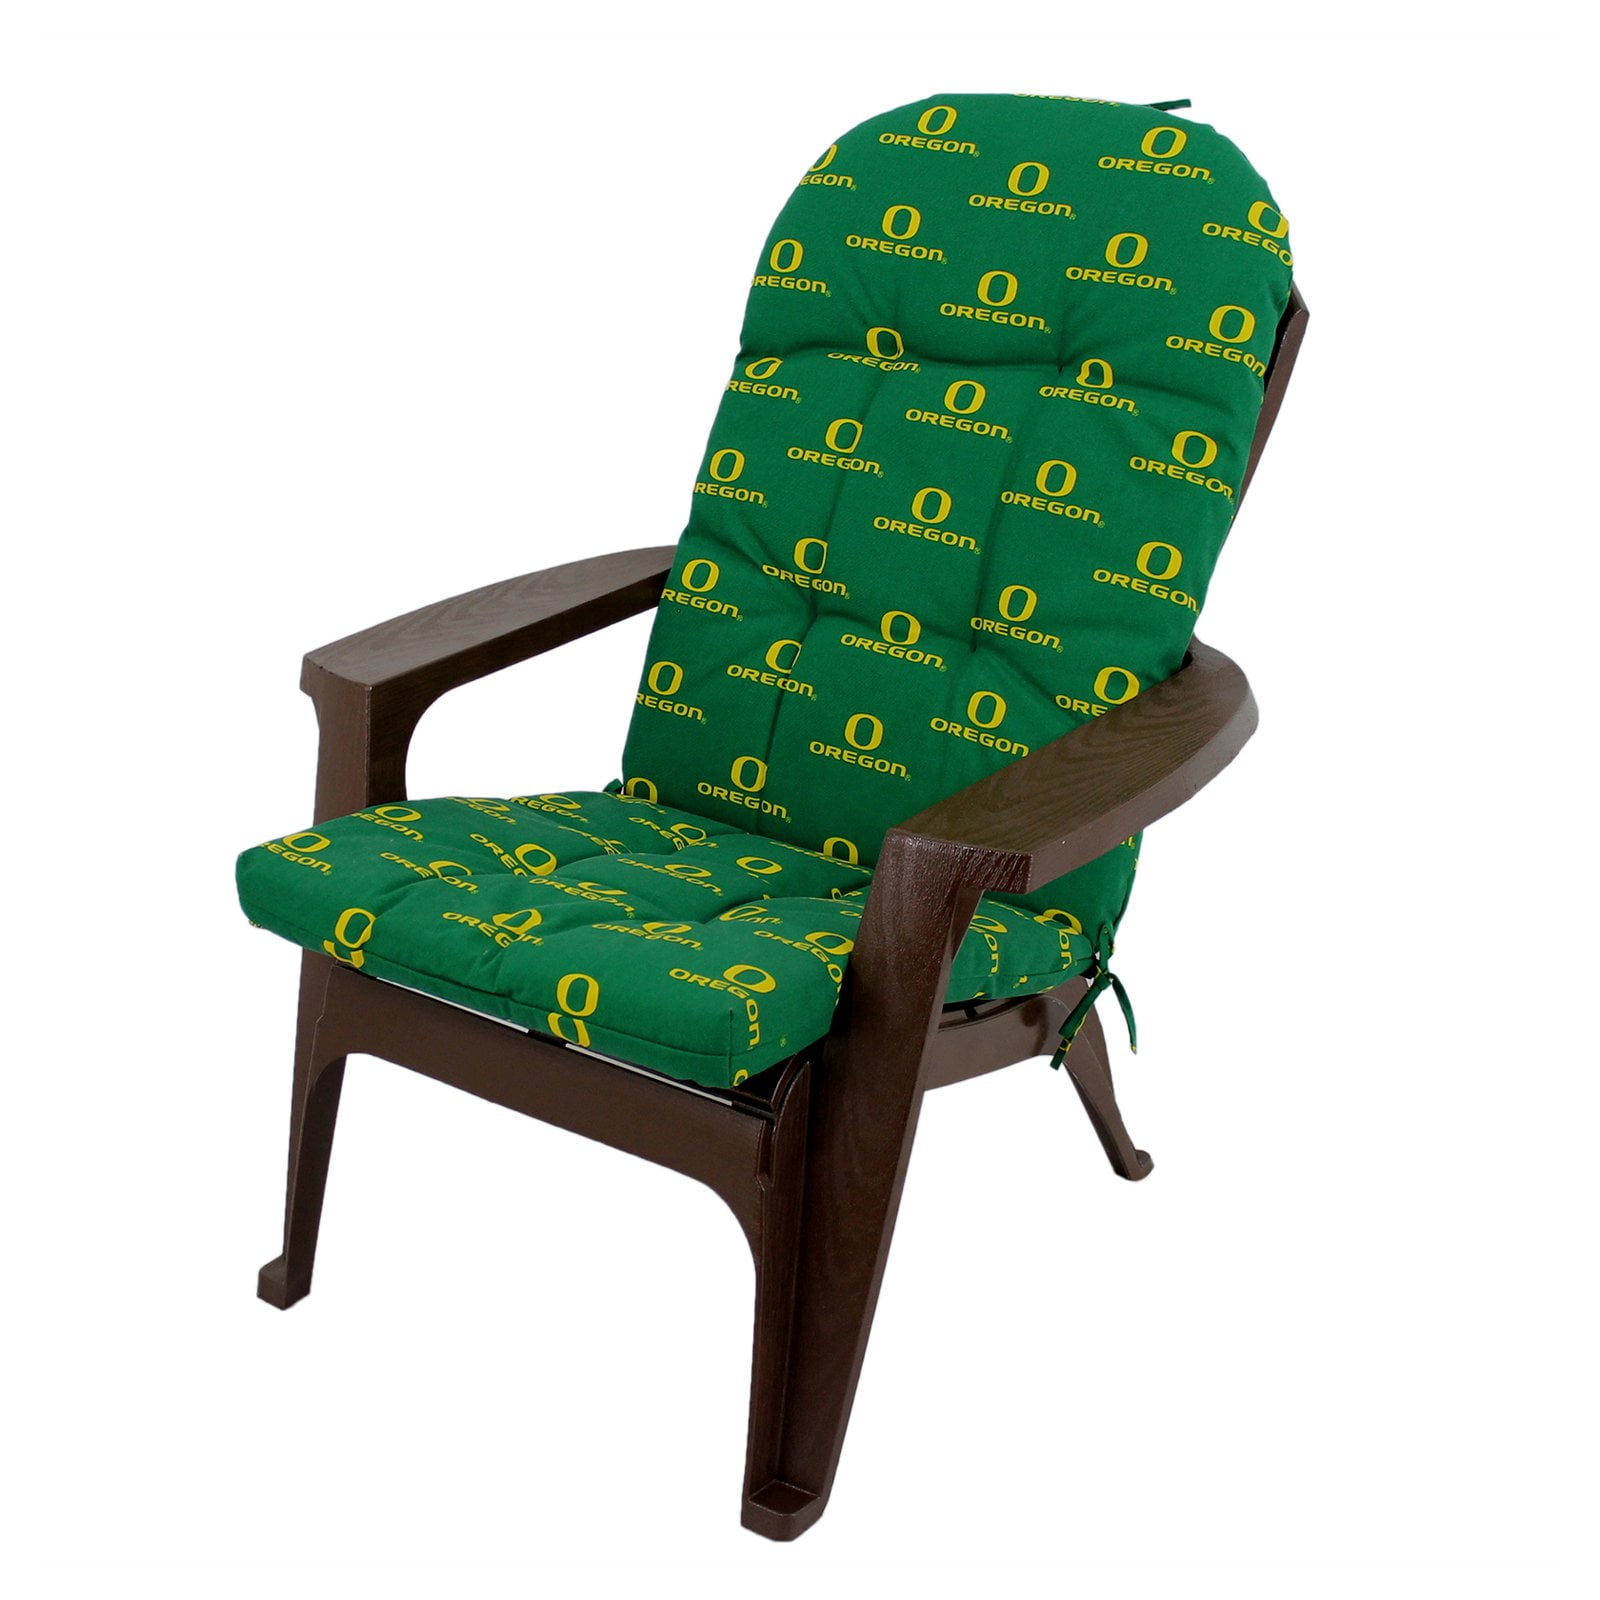 College Covers 49" x 20" Green Adirondack Chair Cushion - Walmart.com